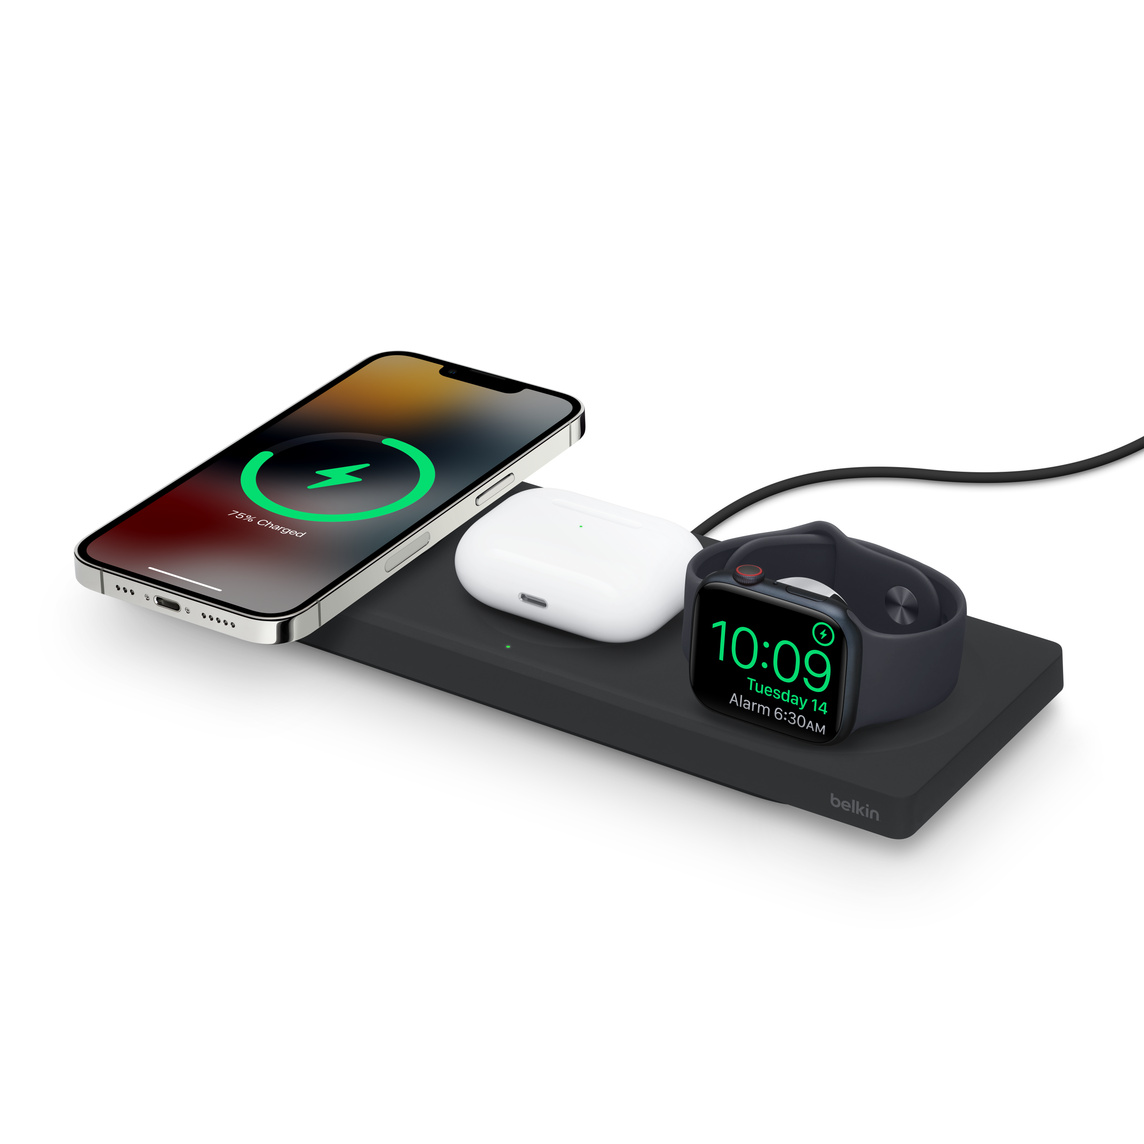 Belkin Boost Charge Pro 3-in-1 Wireless Charging Pad with MagSafe를 이용하면 iPhone, AirPods용 무선 충전 케이스, Apple Watch를 동시에 충전할 수 있습니다.